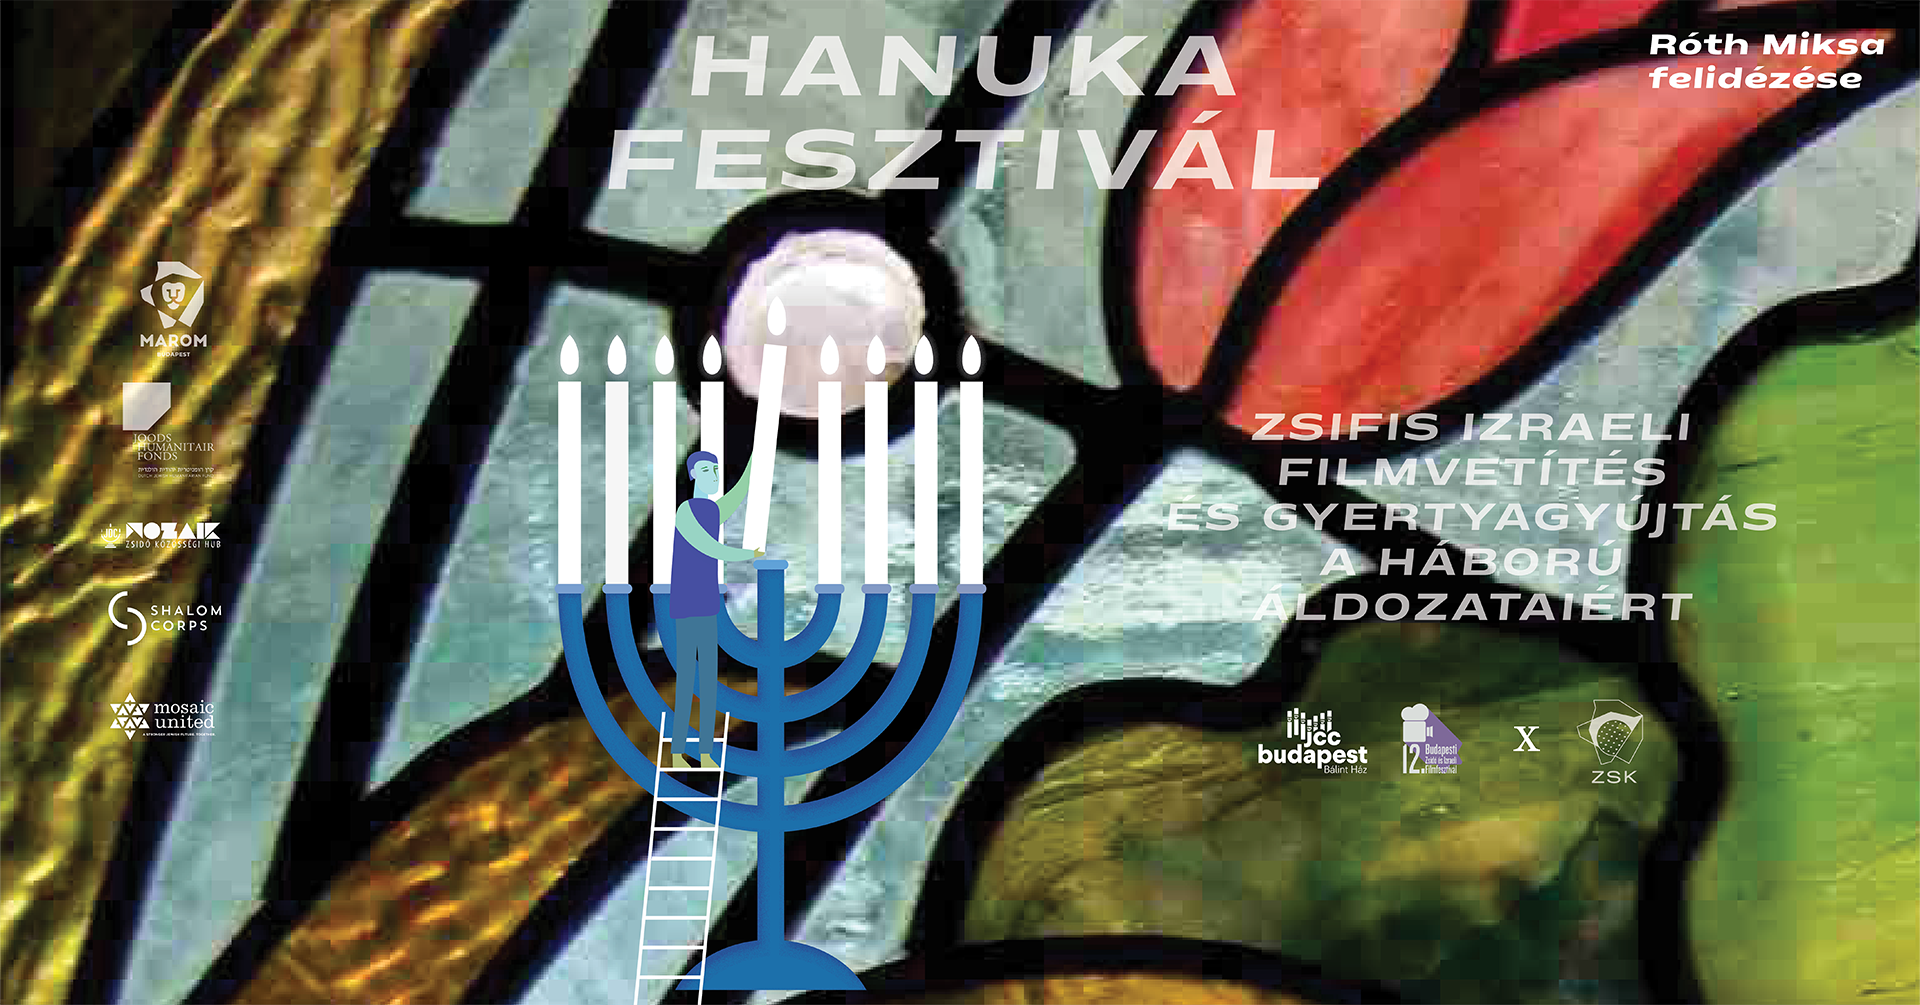 Hanukkah Festival - film screening